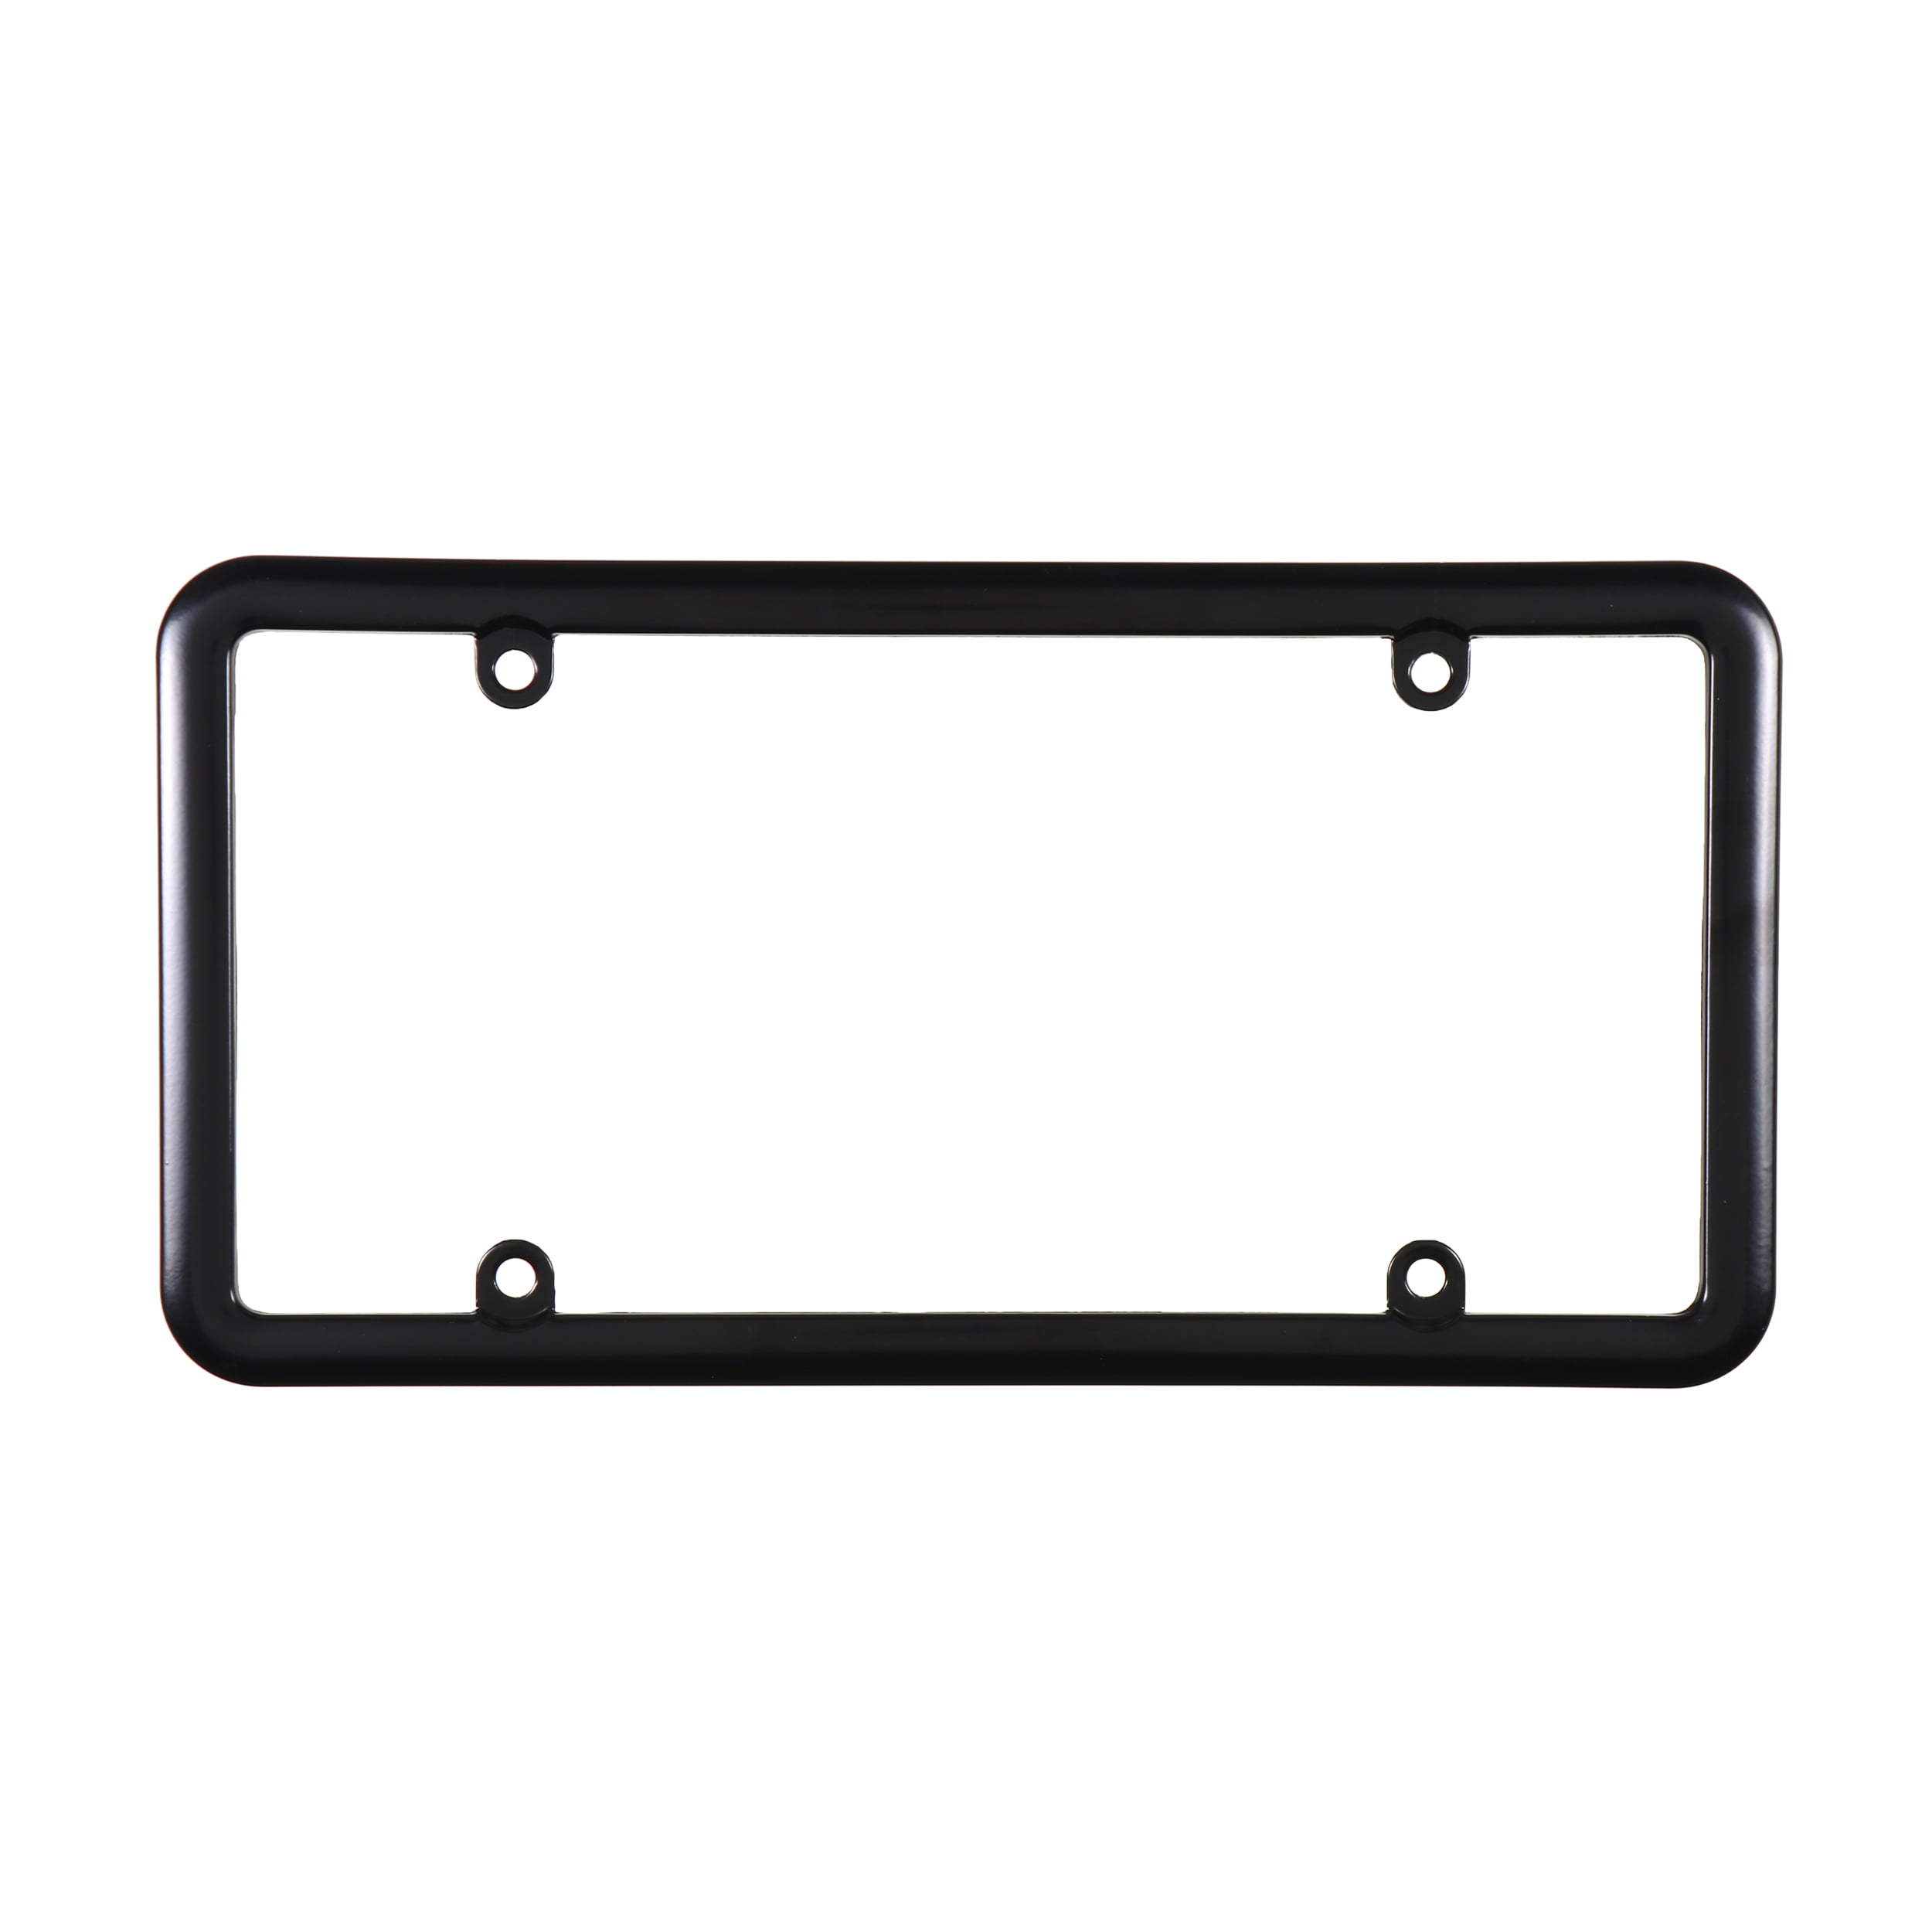 Auto Drive Metal Automotive License Plate Frame with Caps, Black